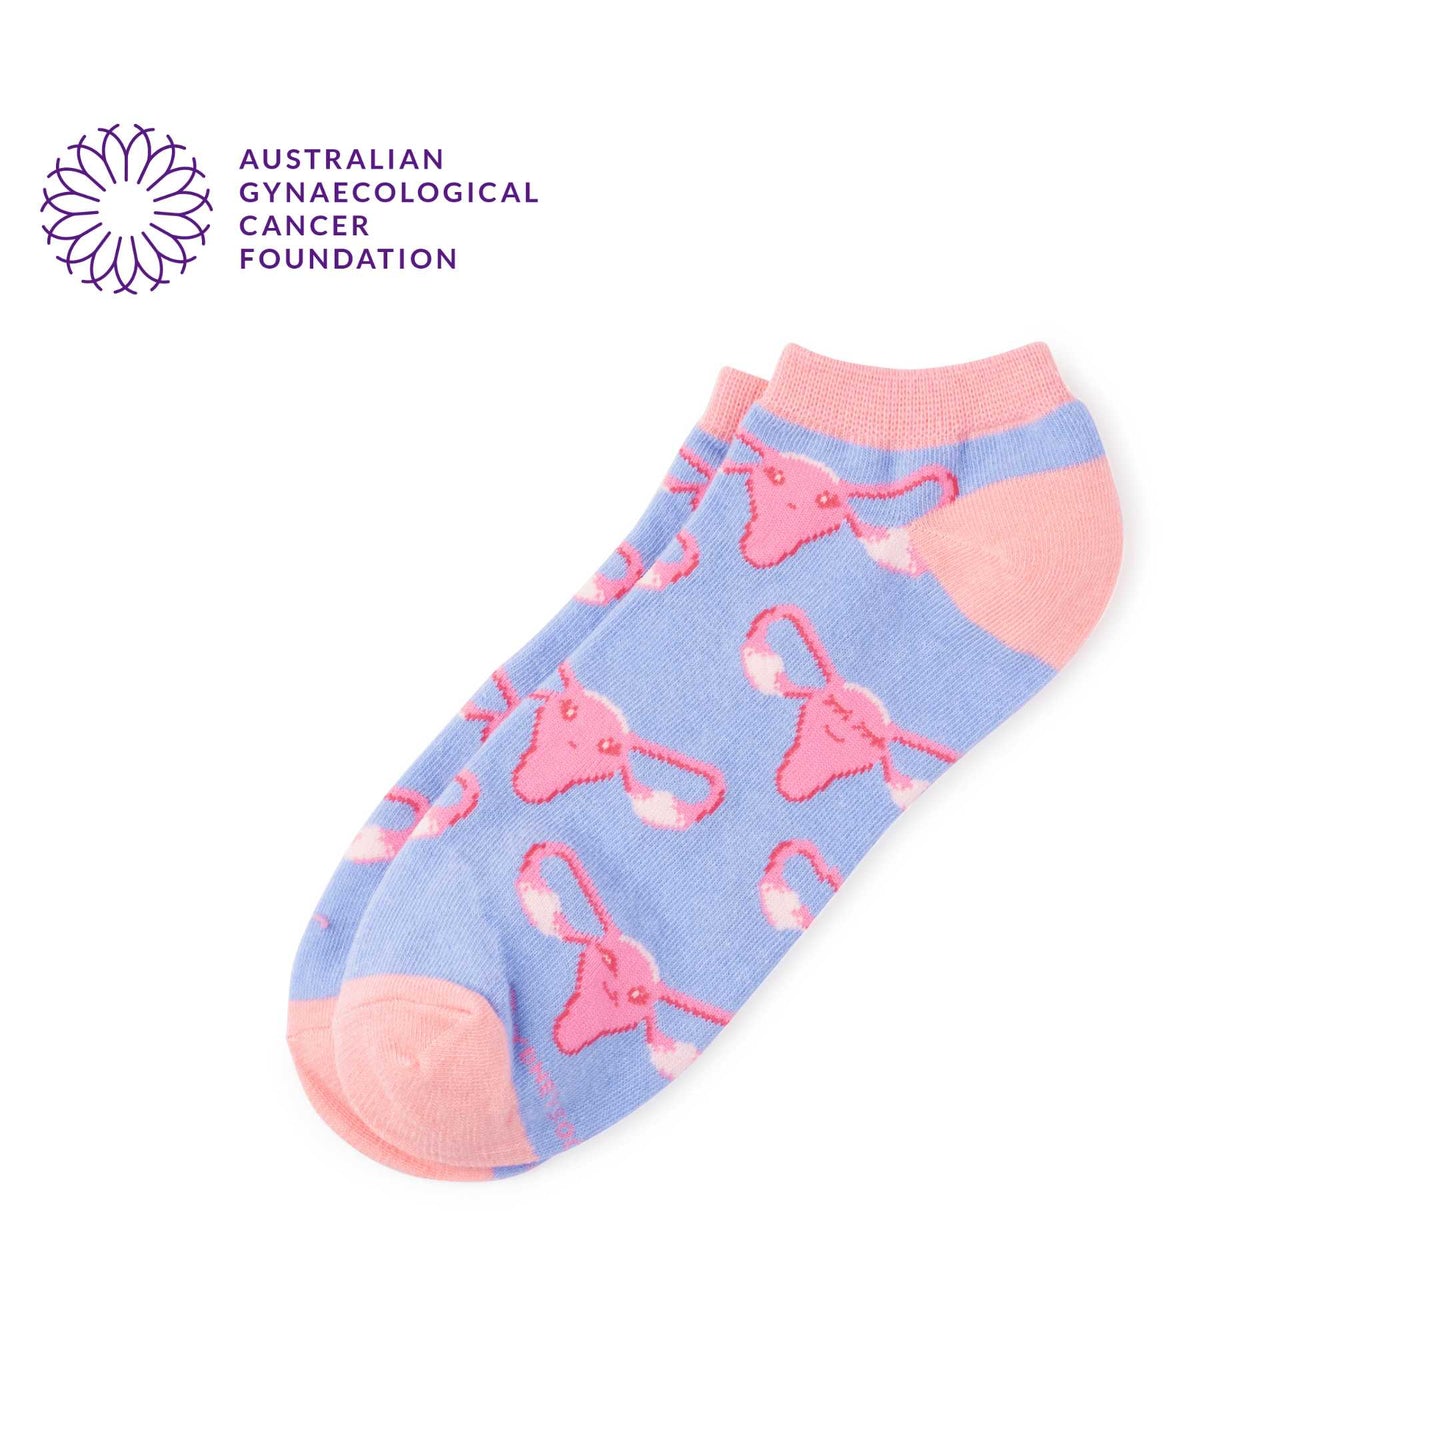 Ovary Ankle Sock Sydney Sock Project